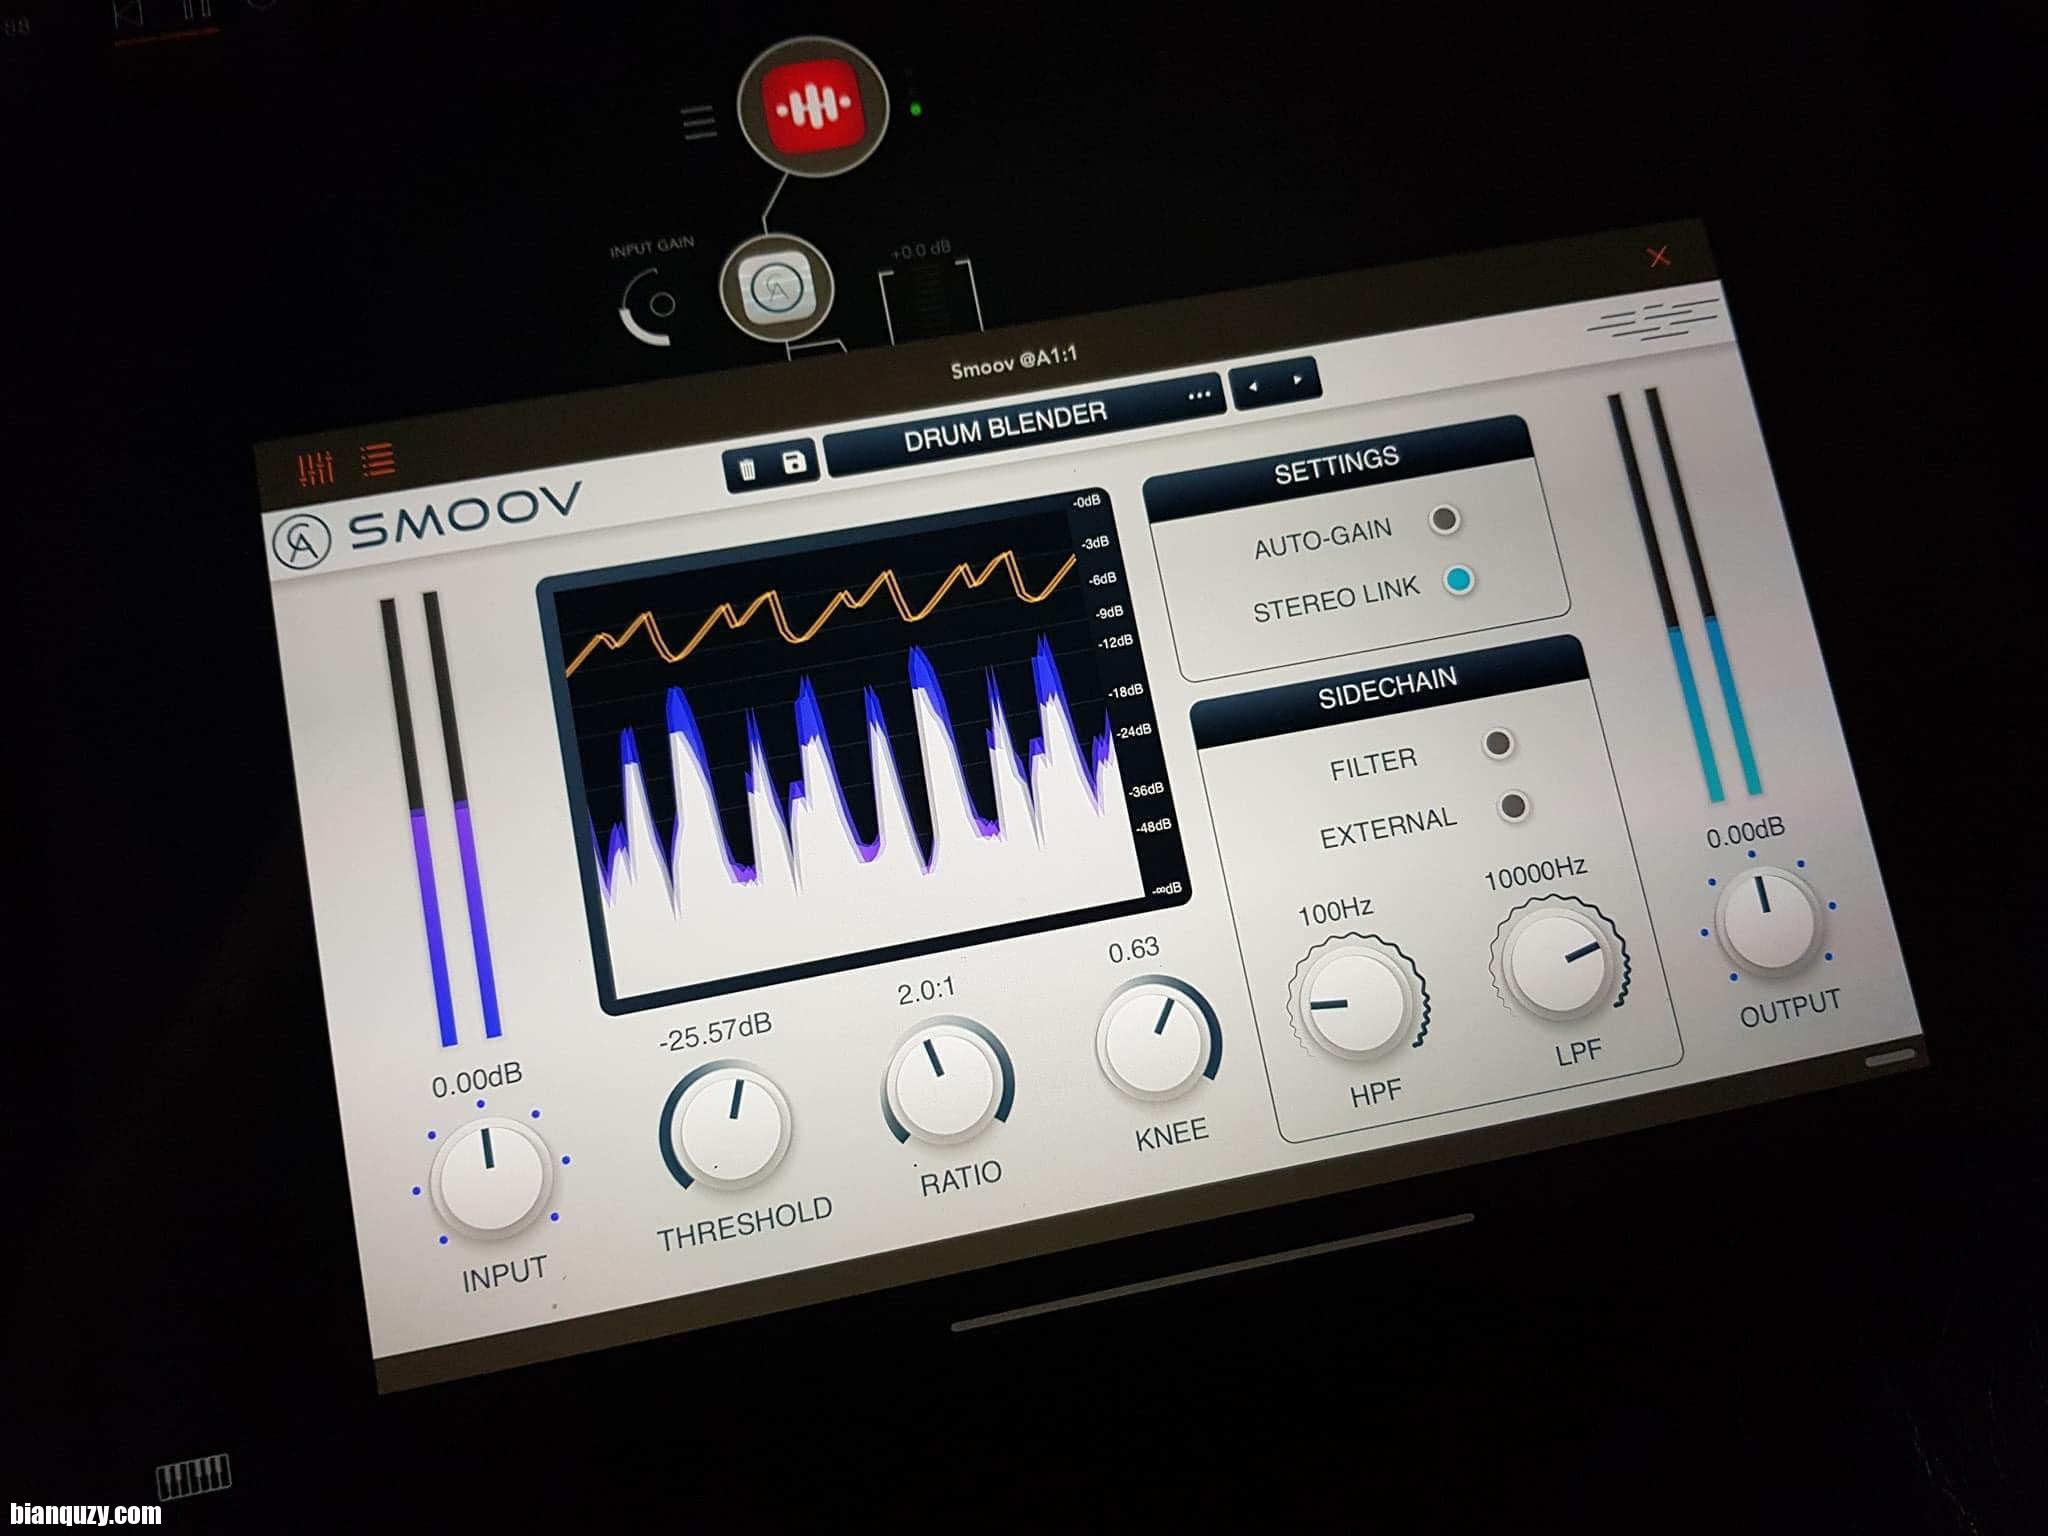 Caelum Audio Smoov 1.1.0 instal the last version for android